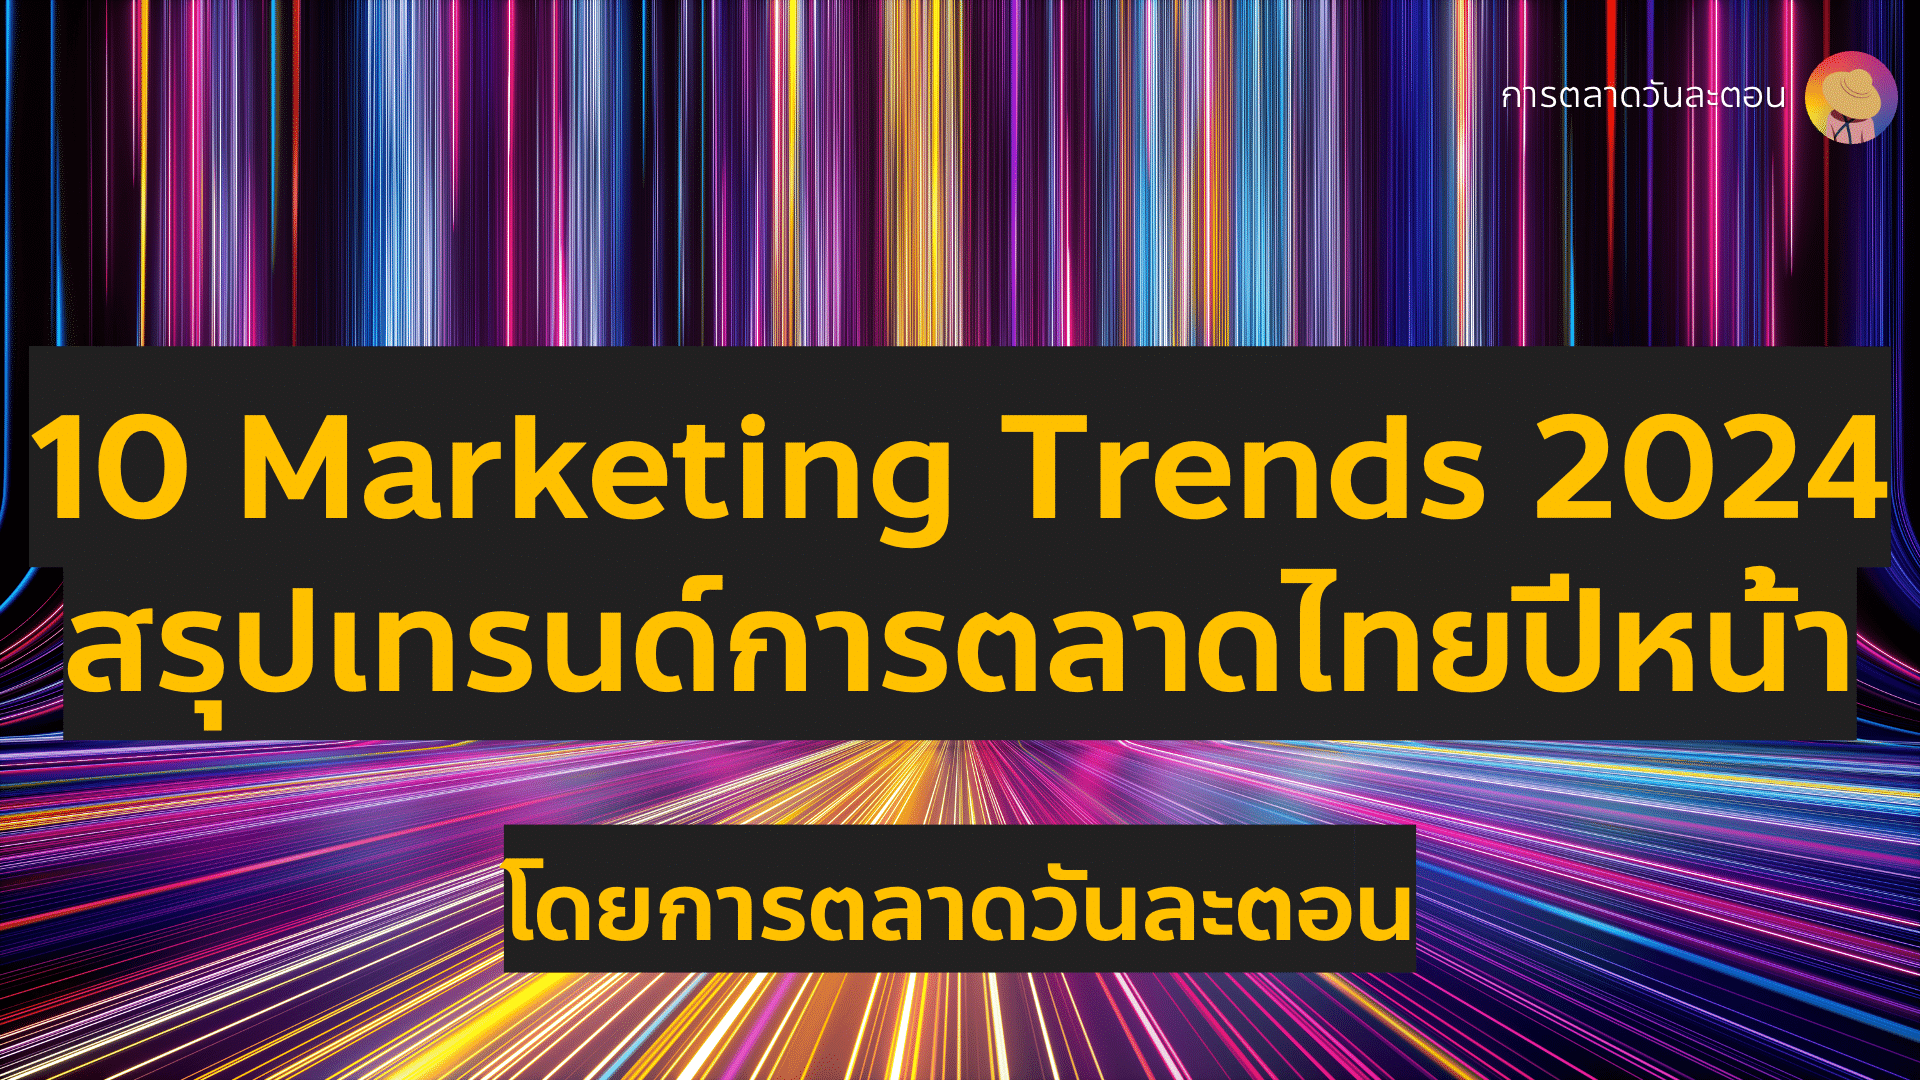 10 Marketing Trends 2024 สรุปเทรนด์การตลาดไทย โดยการตลาดวันละตอน